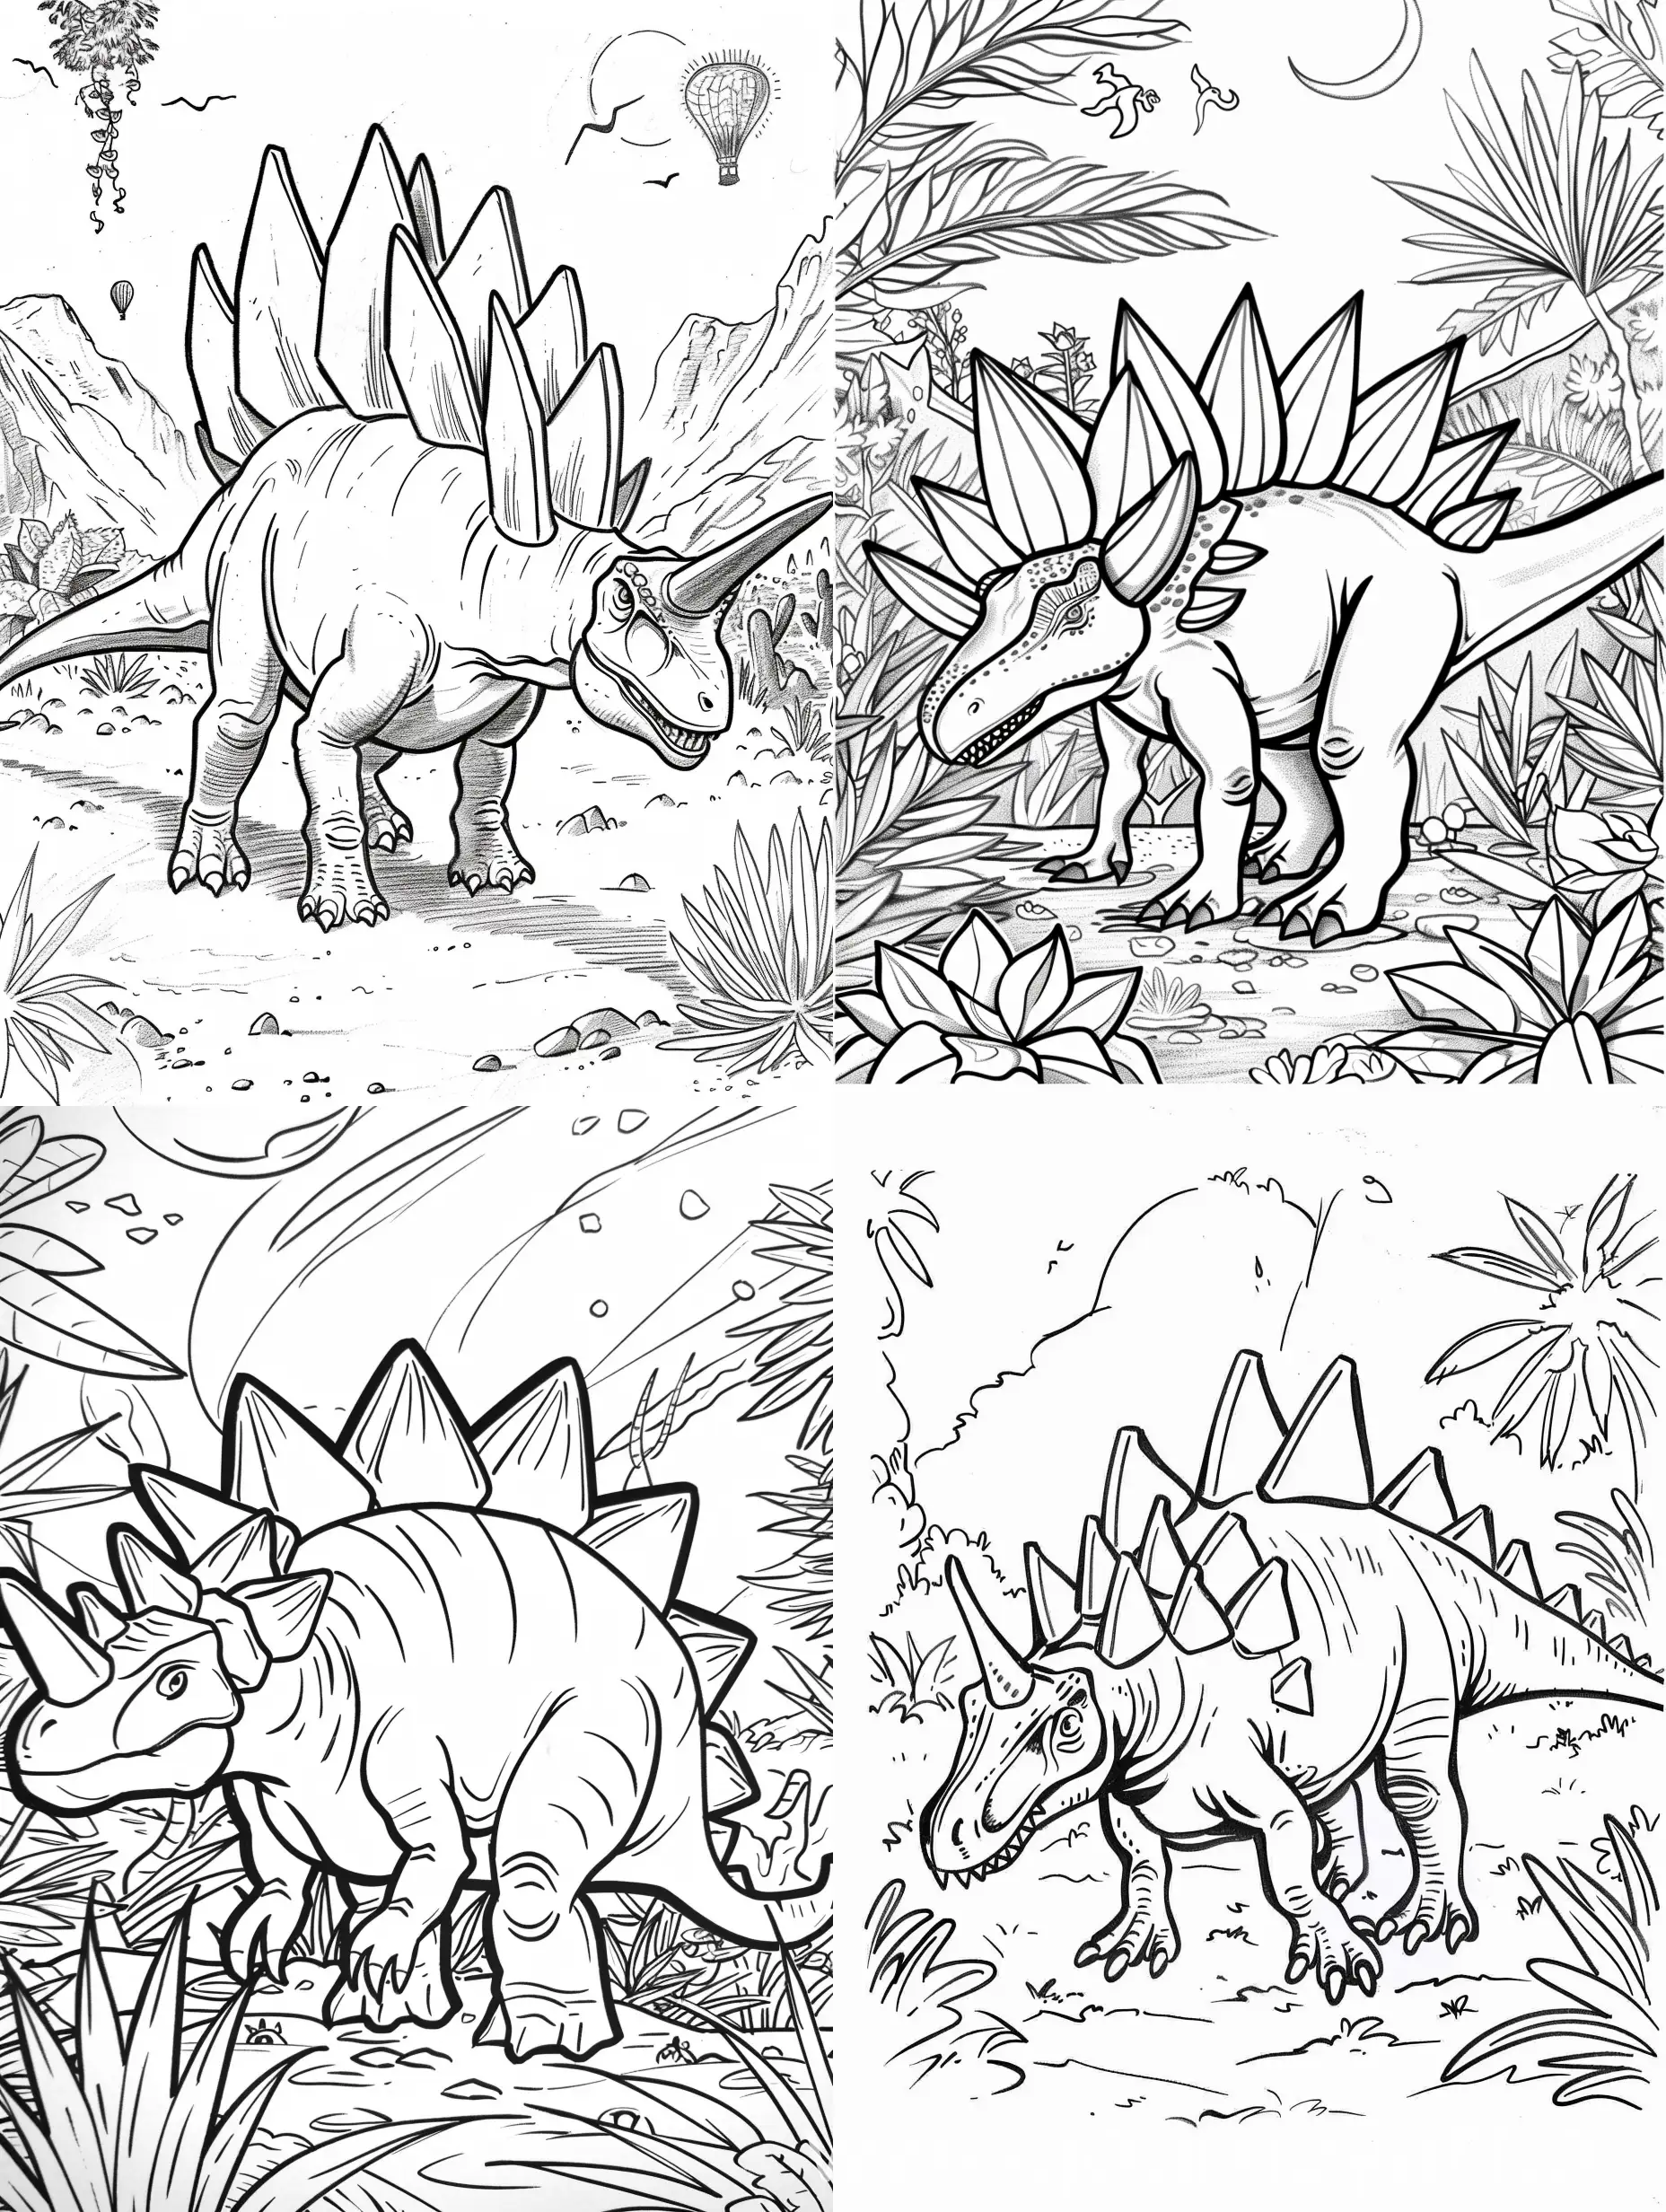 Stegosaurus for coloring book
